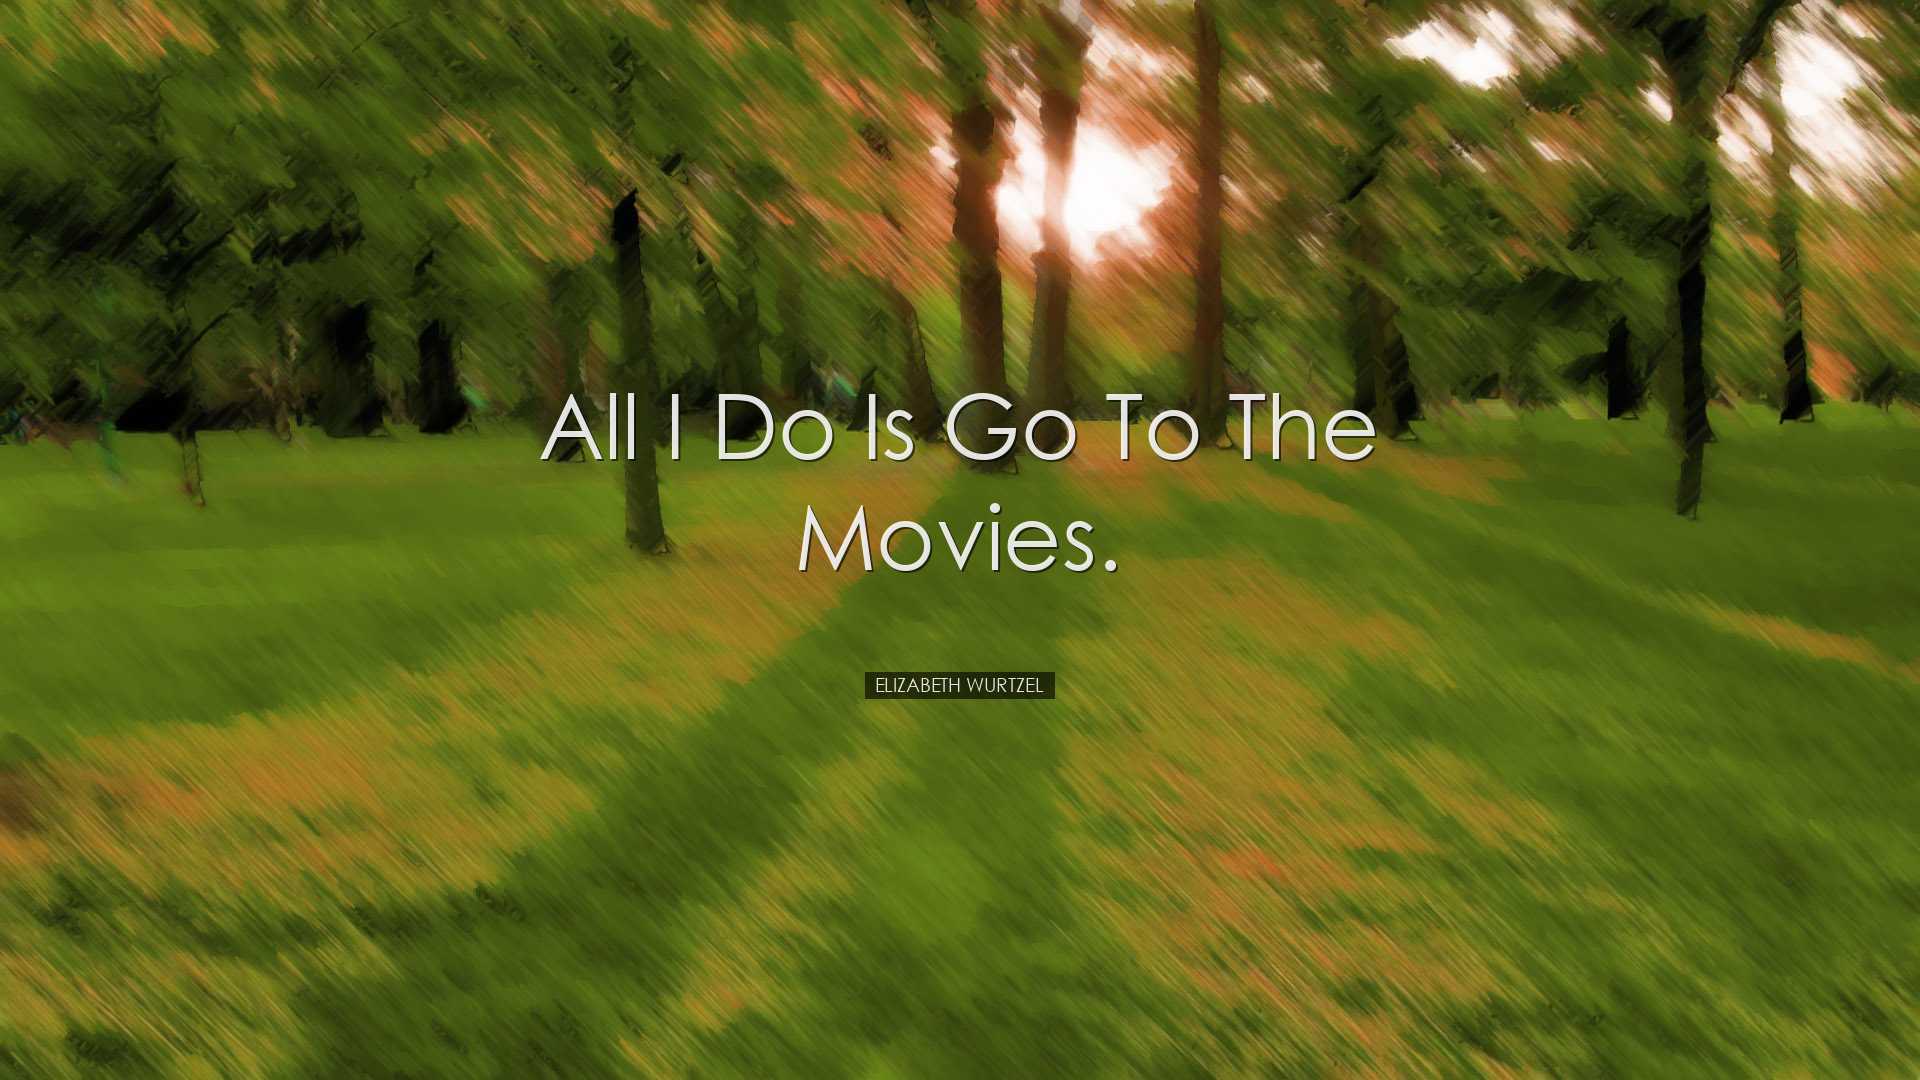 All I do is go to the movies. - Elizabeth Wurtzel